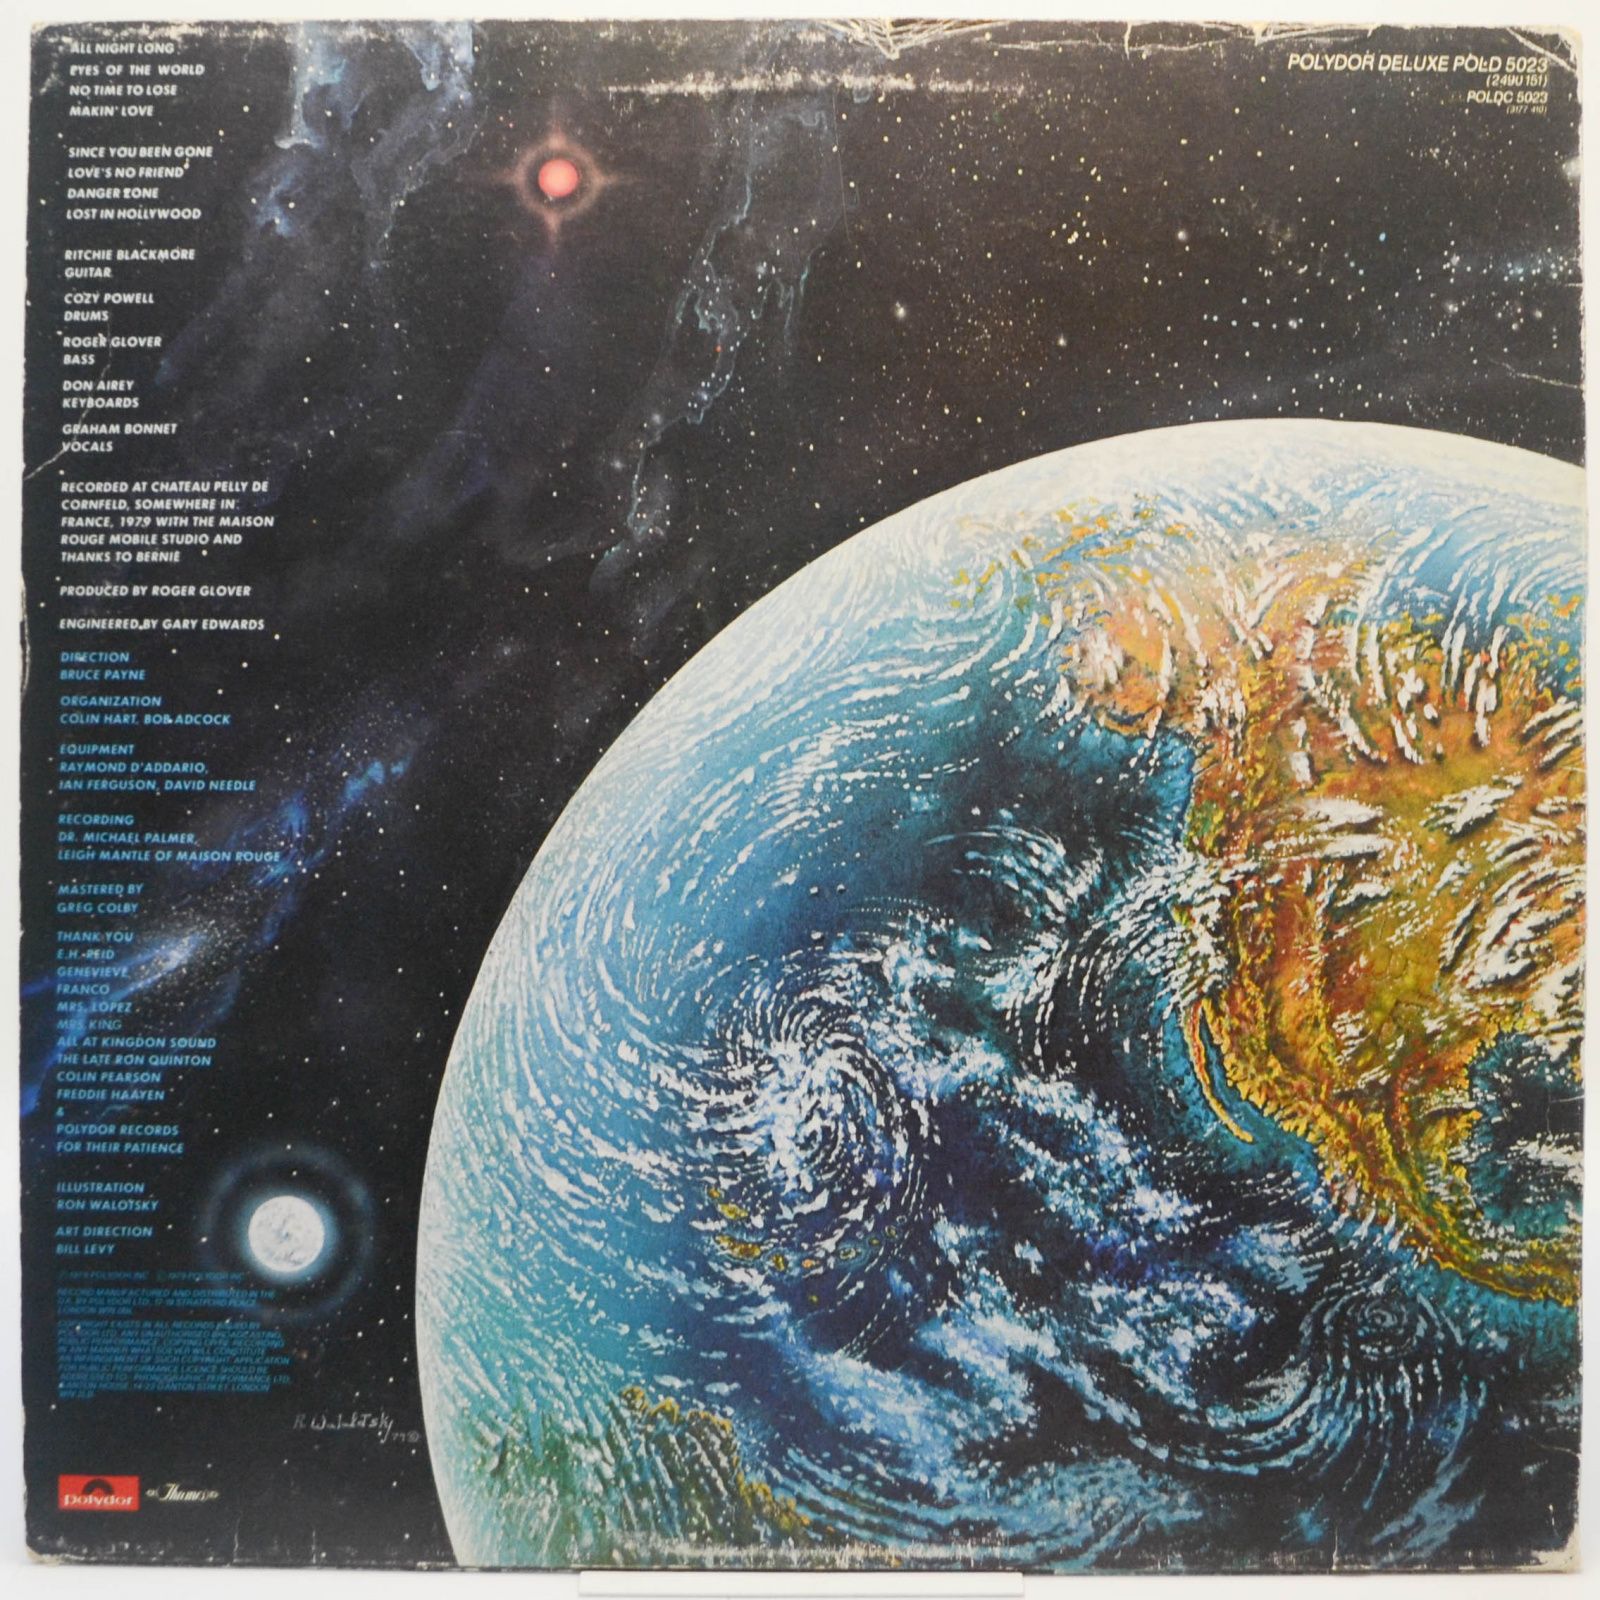 Rainbow — Down To Earth (1-st, UK), 1979